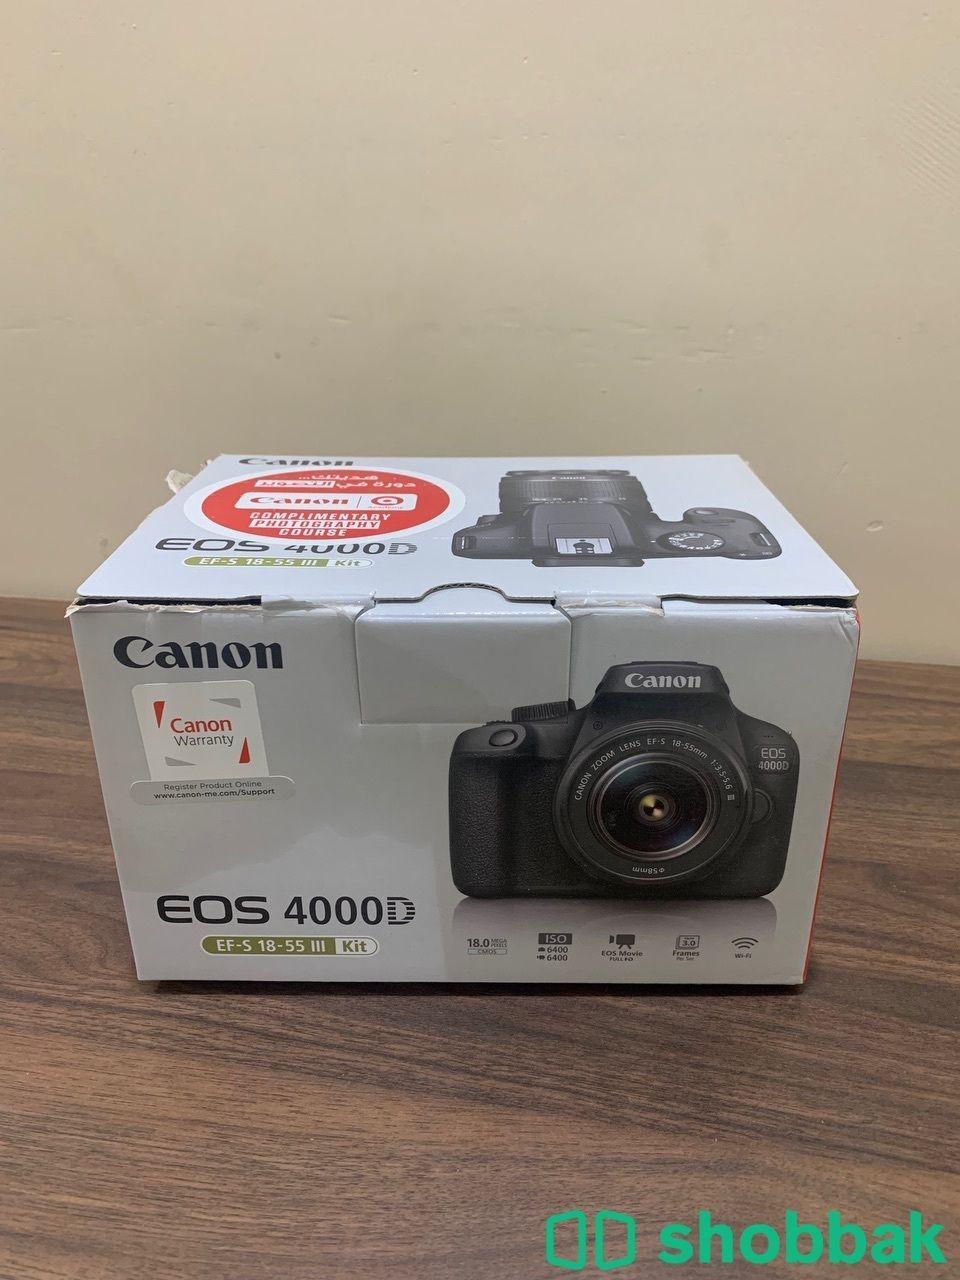 كاميرة كانون EOS 4000D شبه جديدة ✅ Shobbak Saudi Arabia